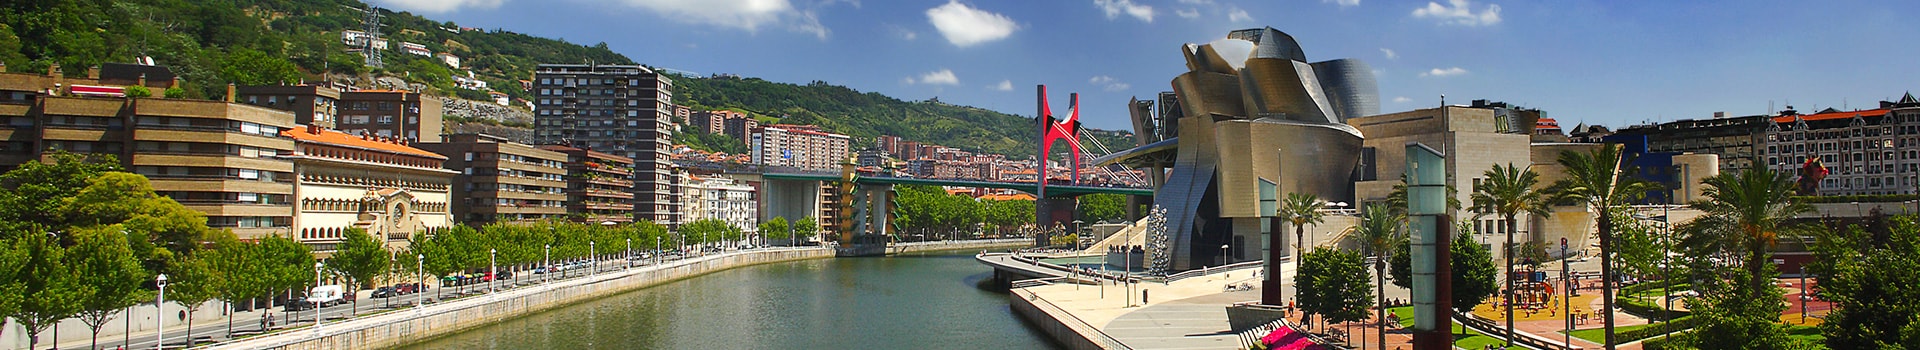 Oporto - Bilbao